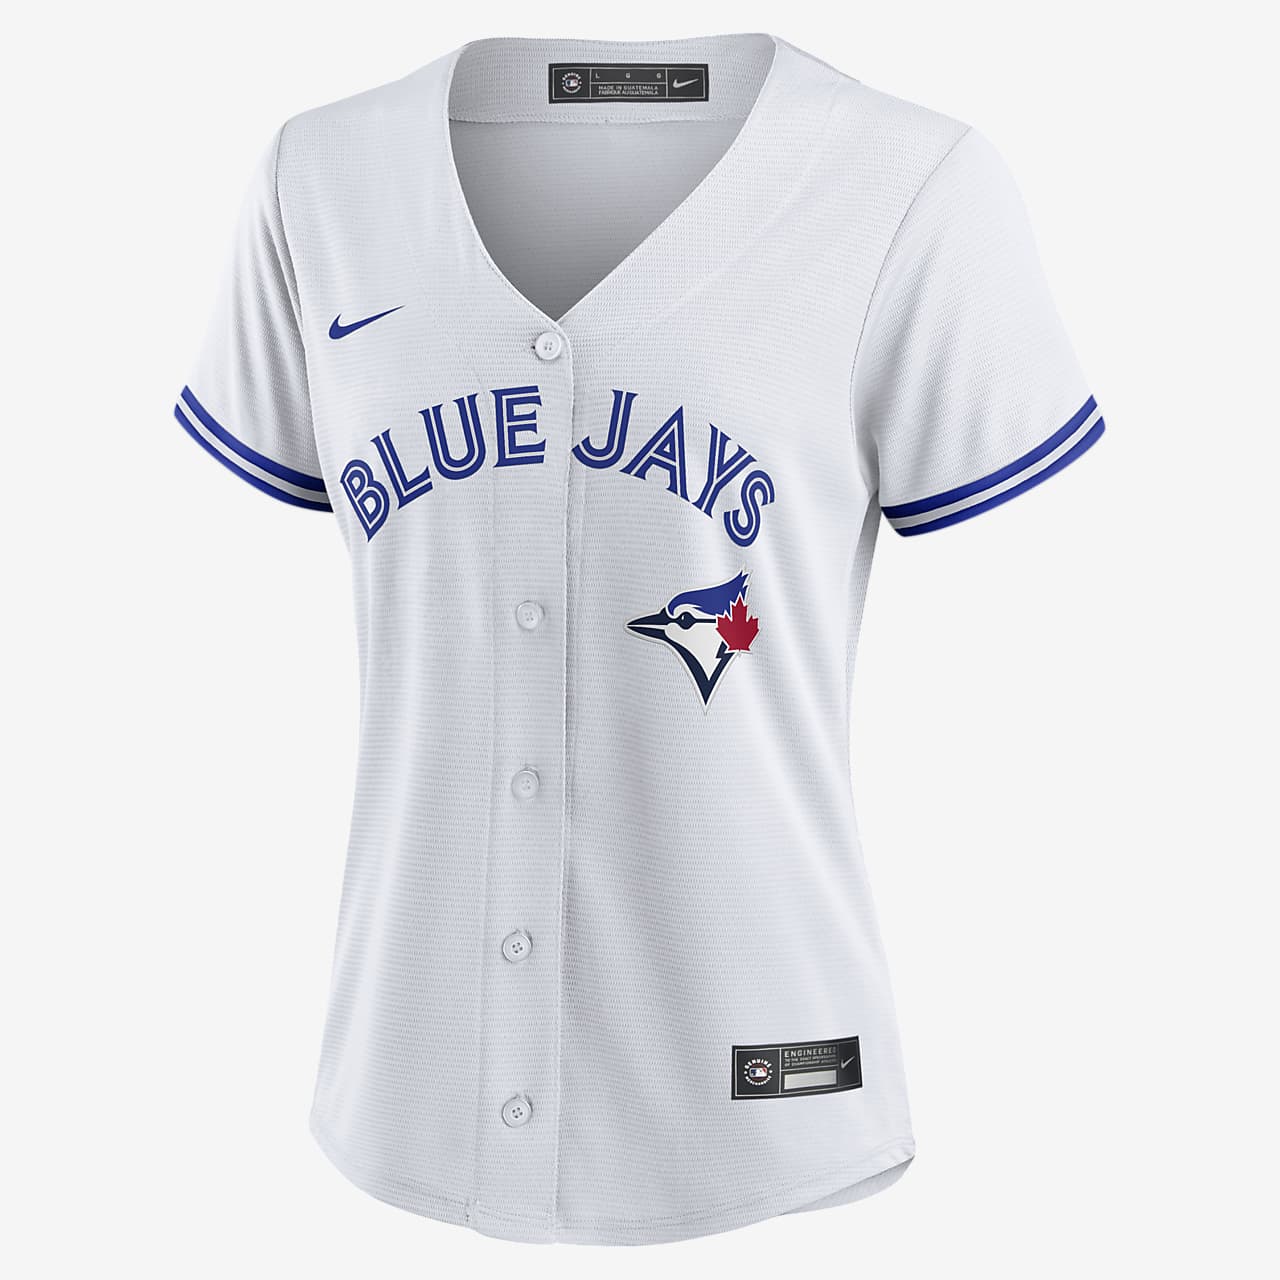 MLB Toronto Blue Jays (George Springer) Men's Replica Baseball Jersey.